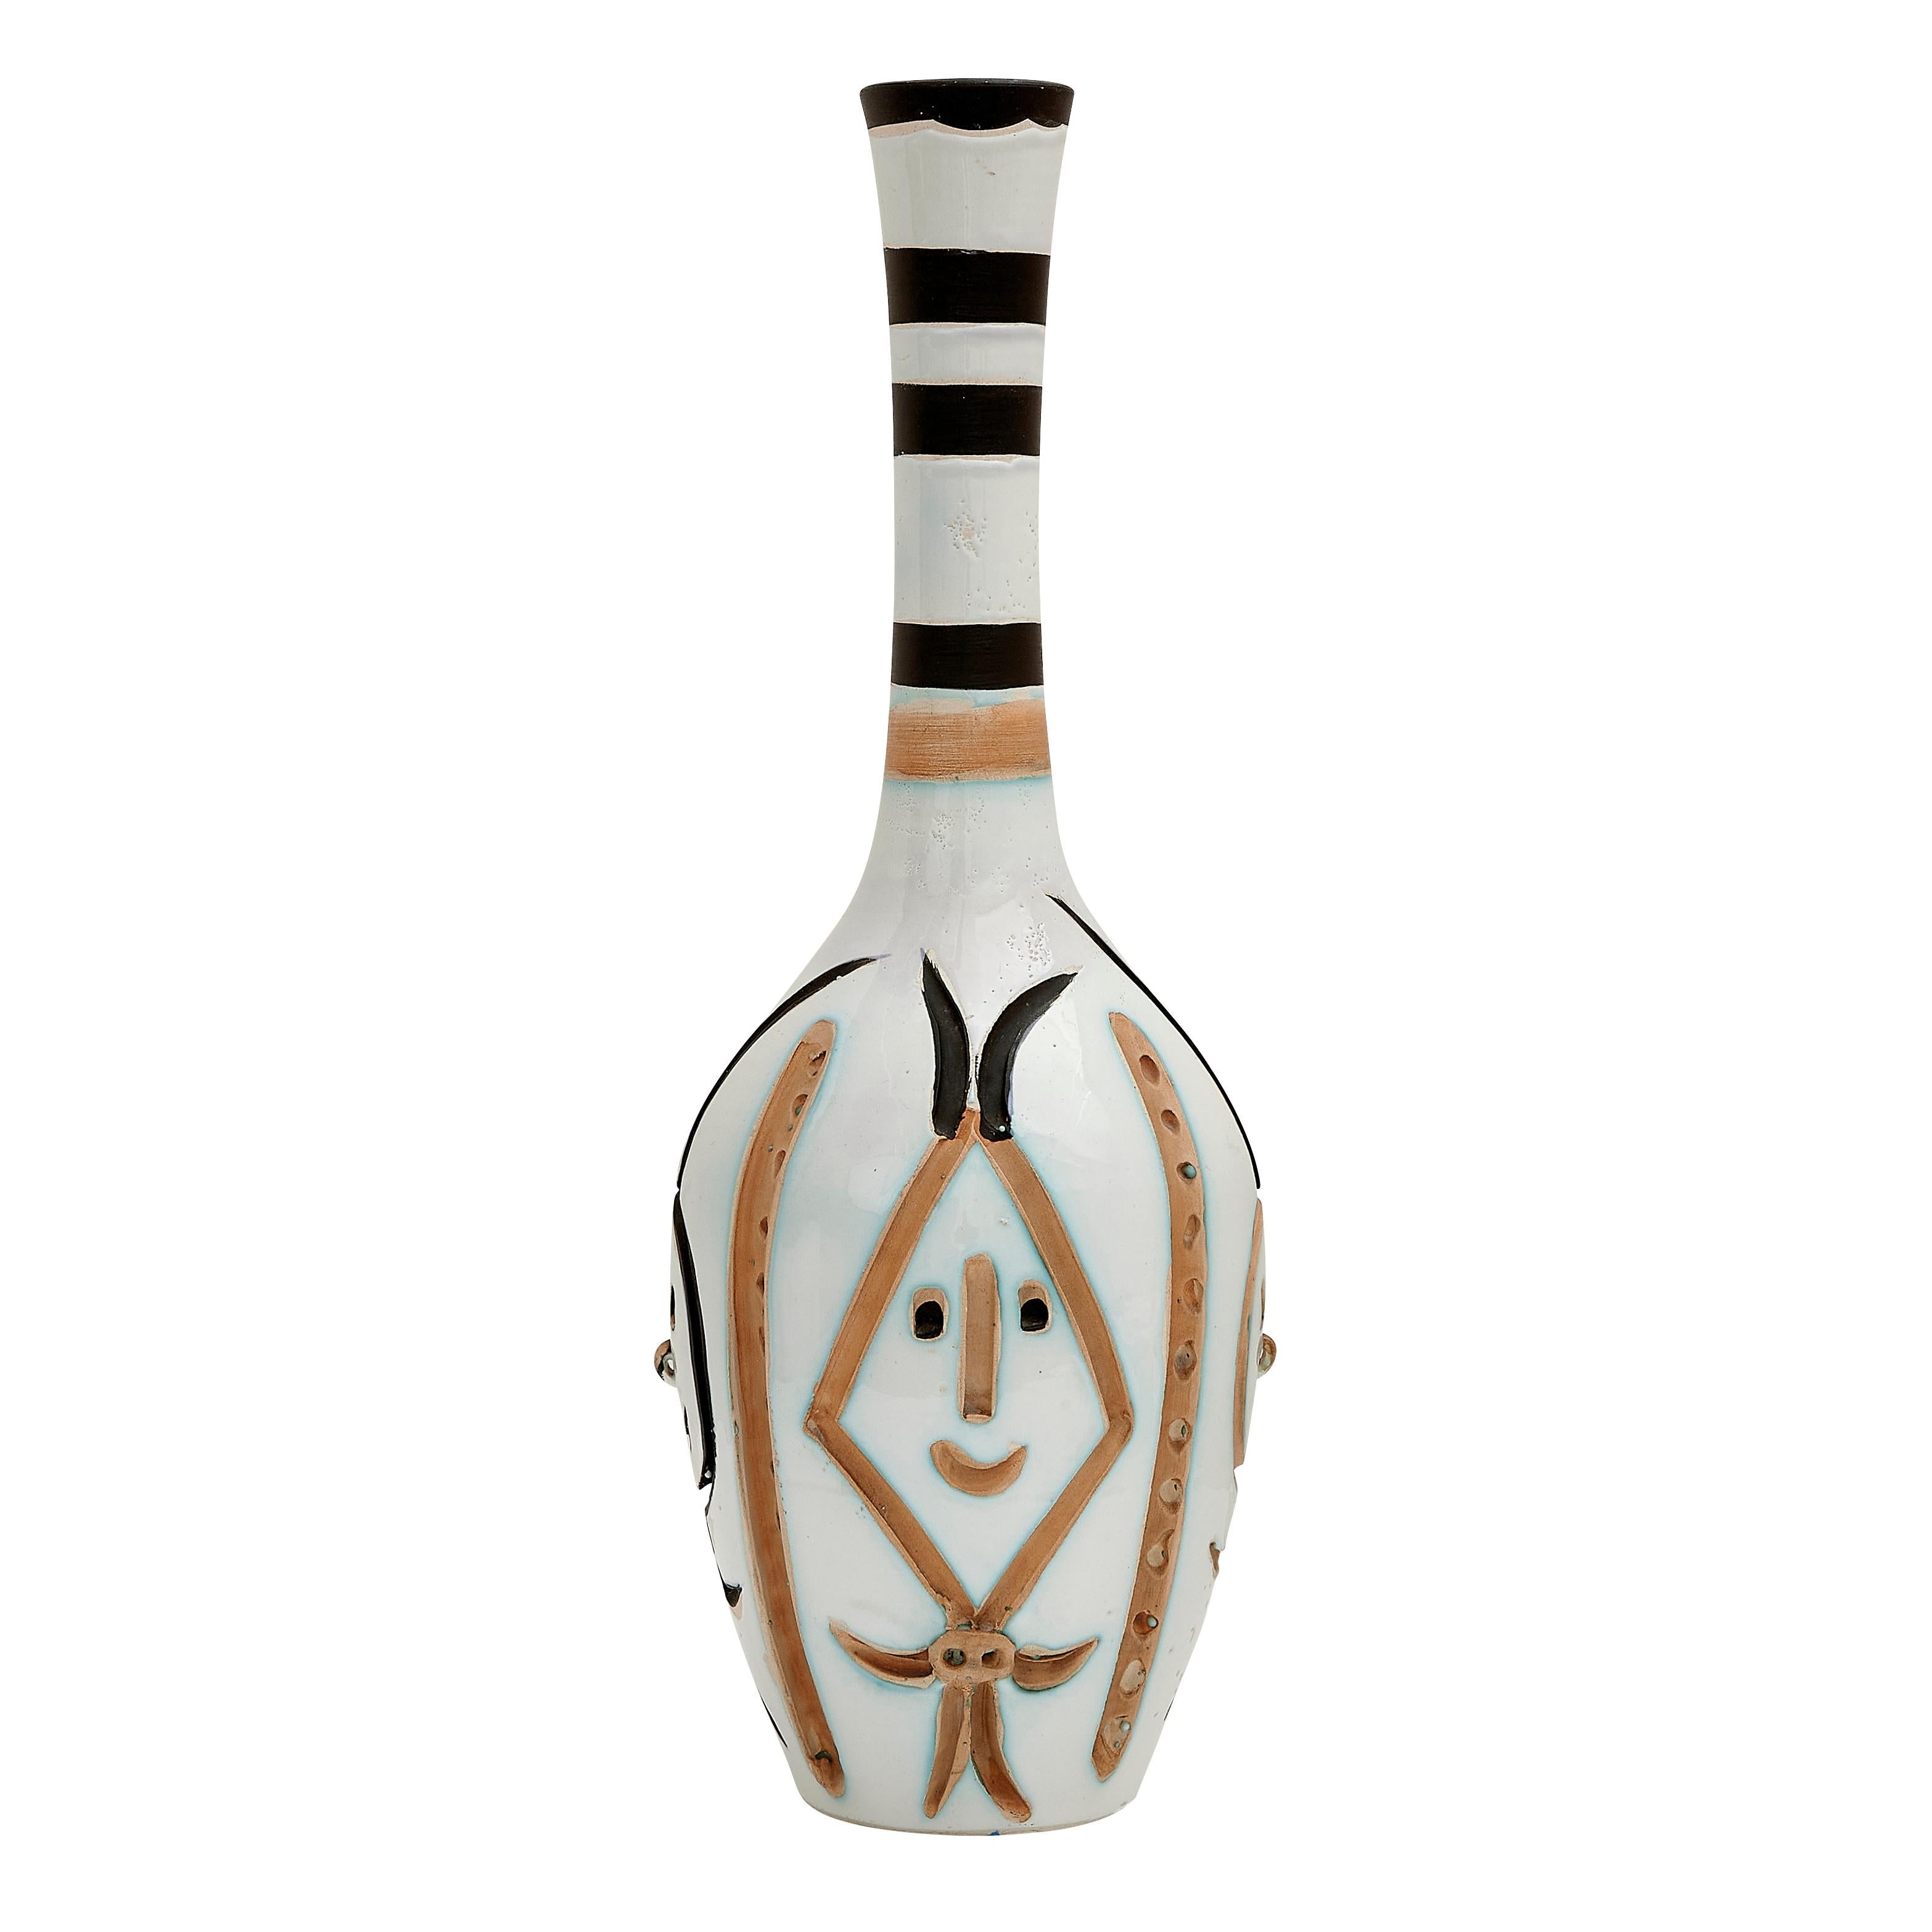 Pablo Picasso 'Bouteille gravée' (A. R. 249) Engraved Bottle Madoura Vase 1954 For Sale 3